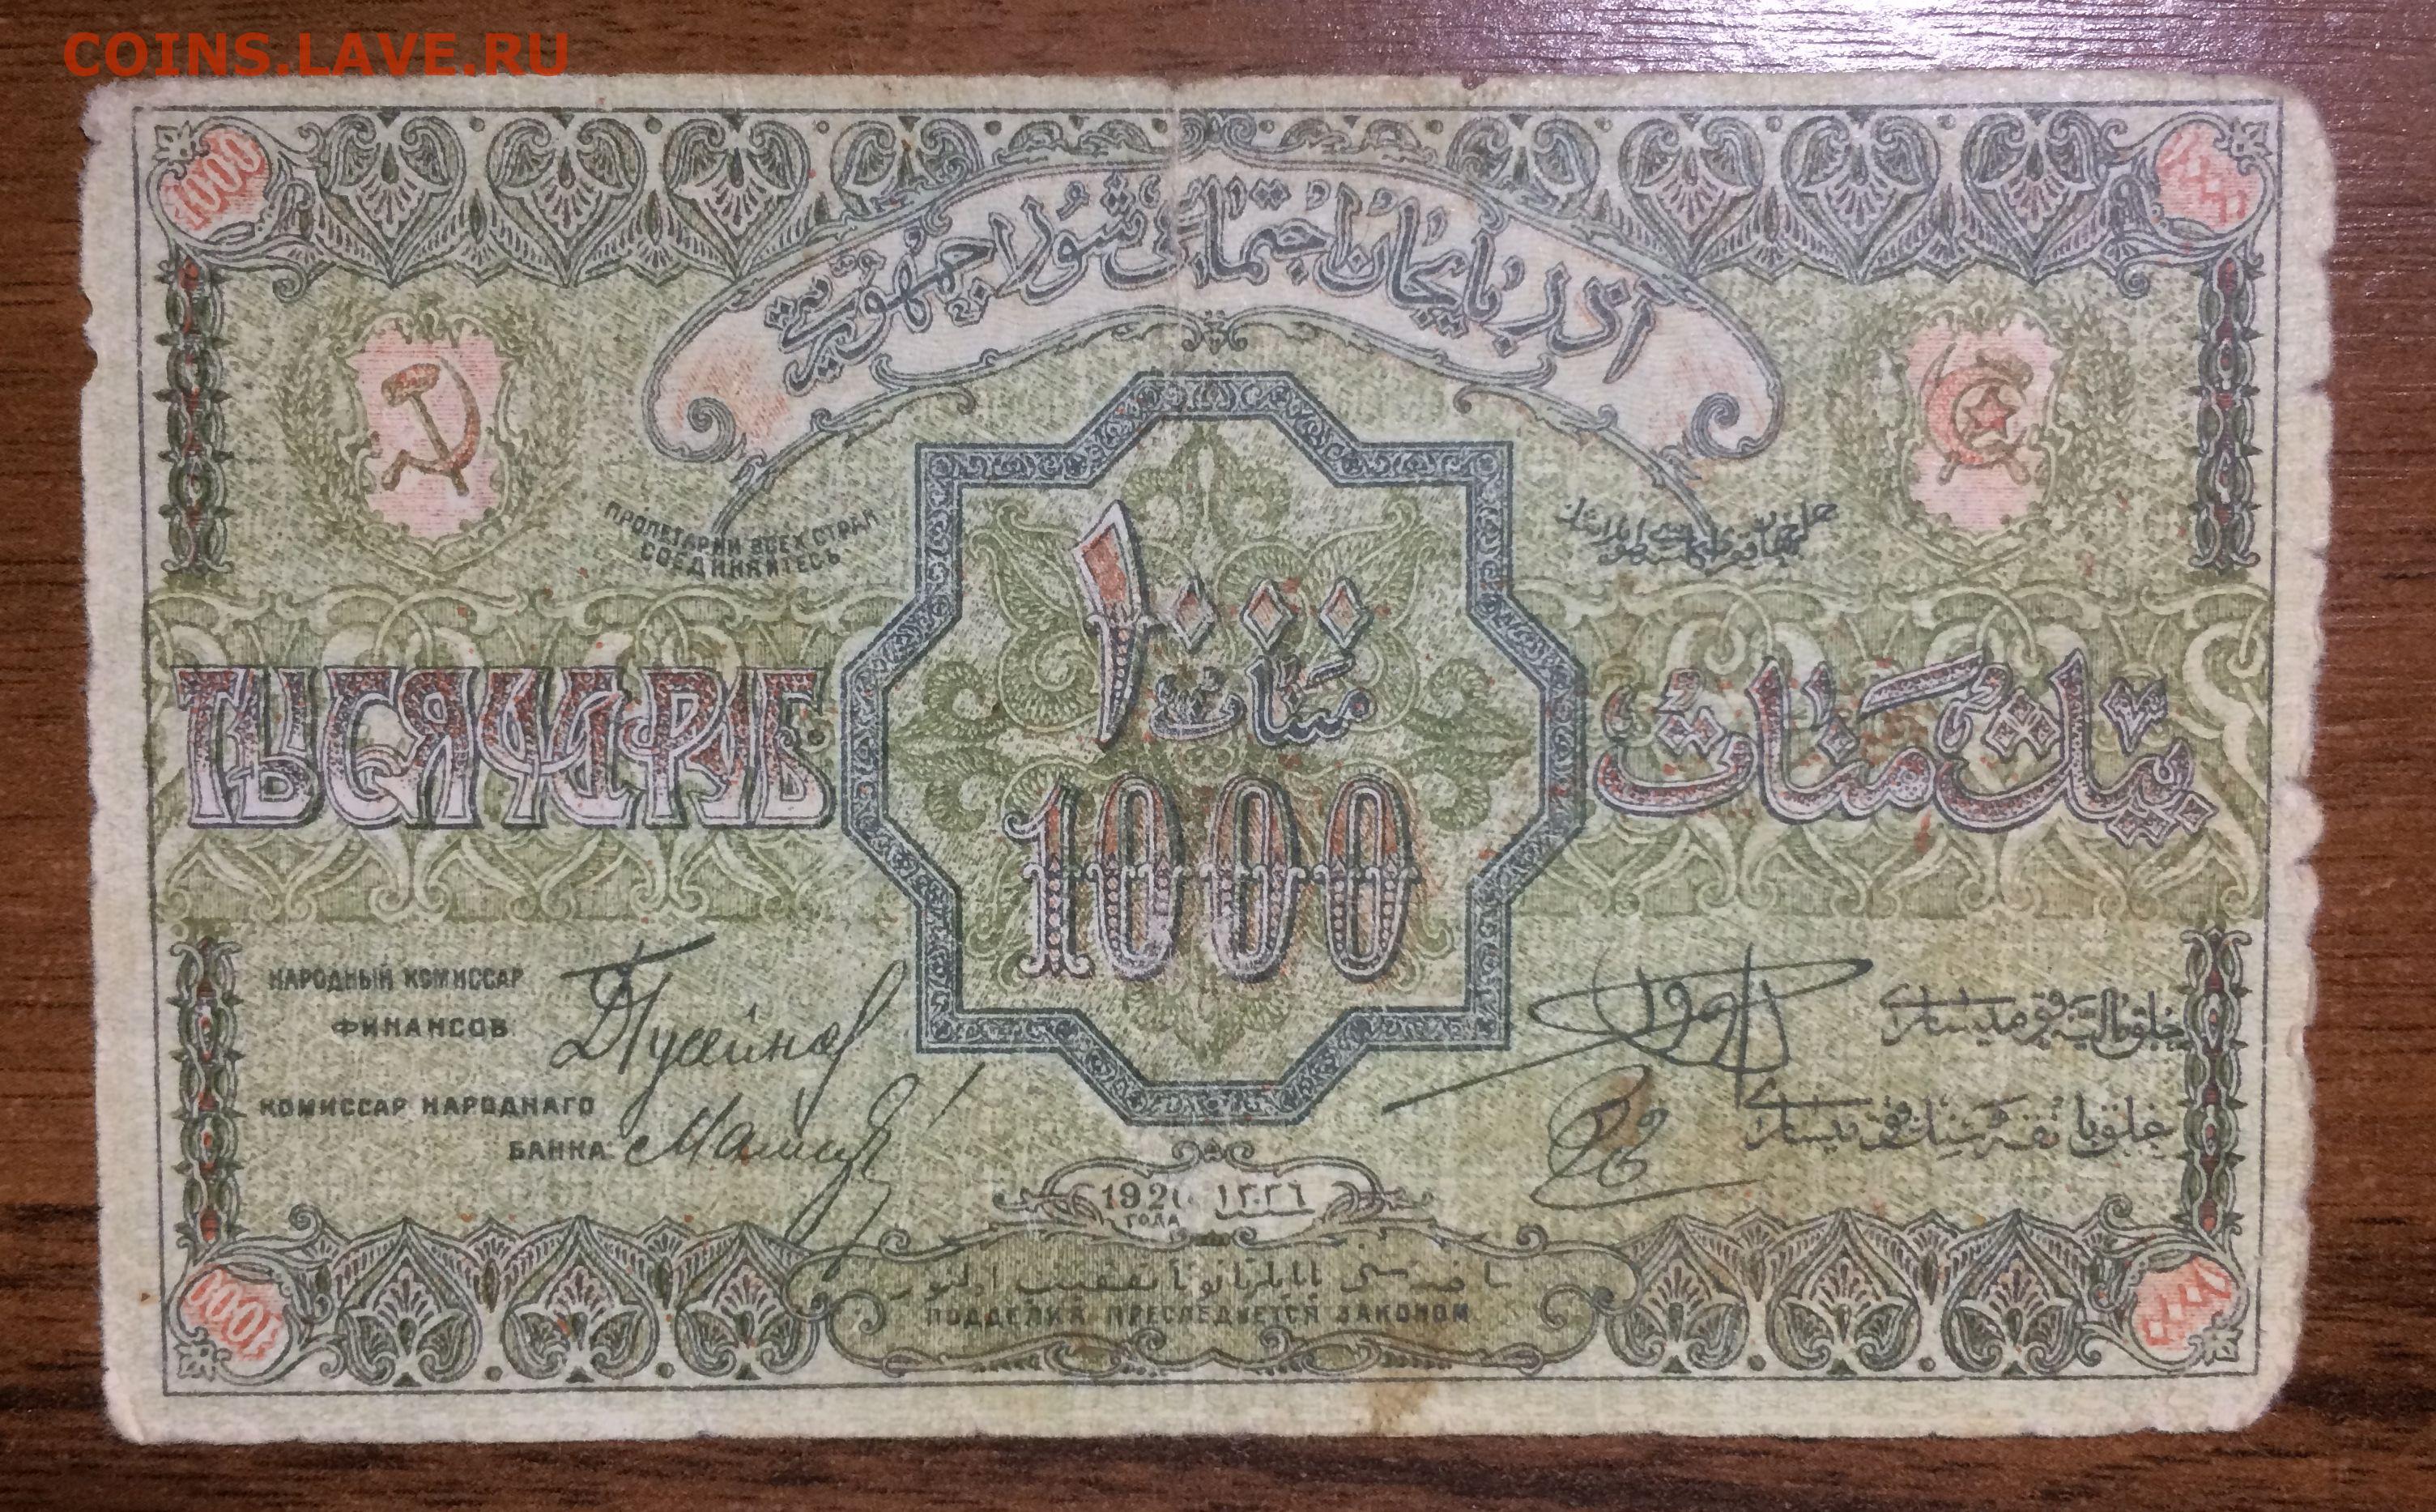 1000 рублей азербайджанский курс. Тысяча рублей 1920 года. Купюры Азербайджана 1920.